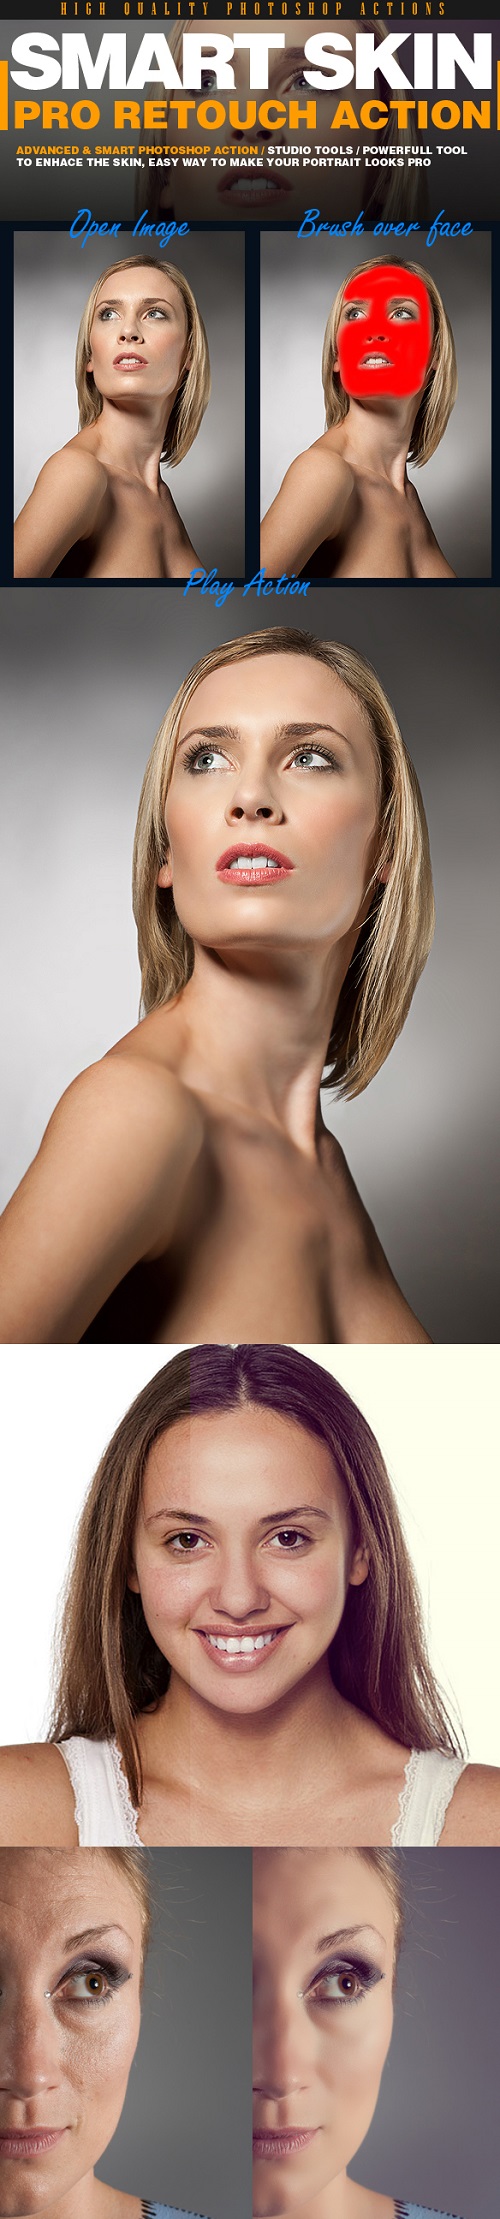 Smart Skin Pro Retouch Photoshop Action - 19506942